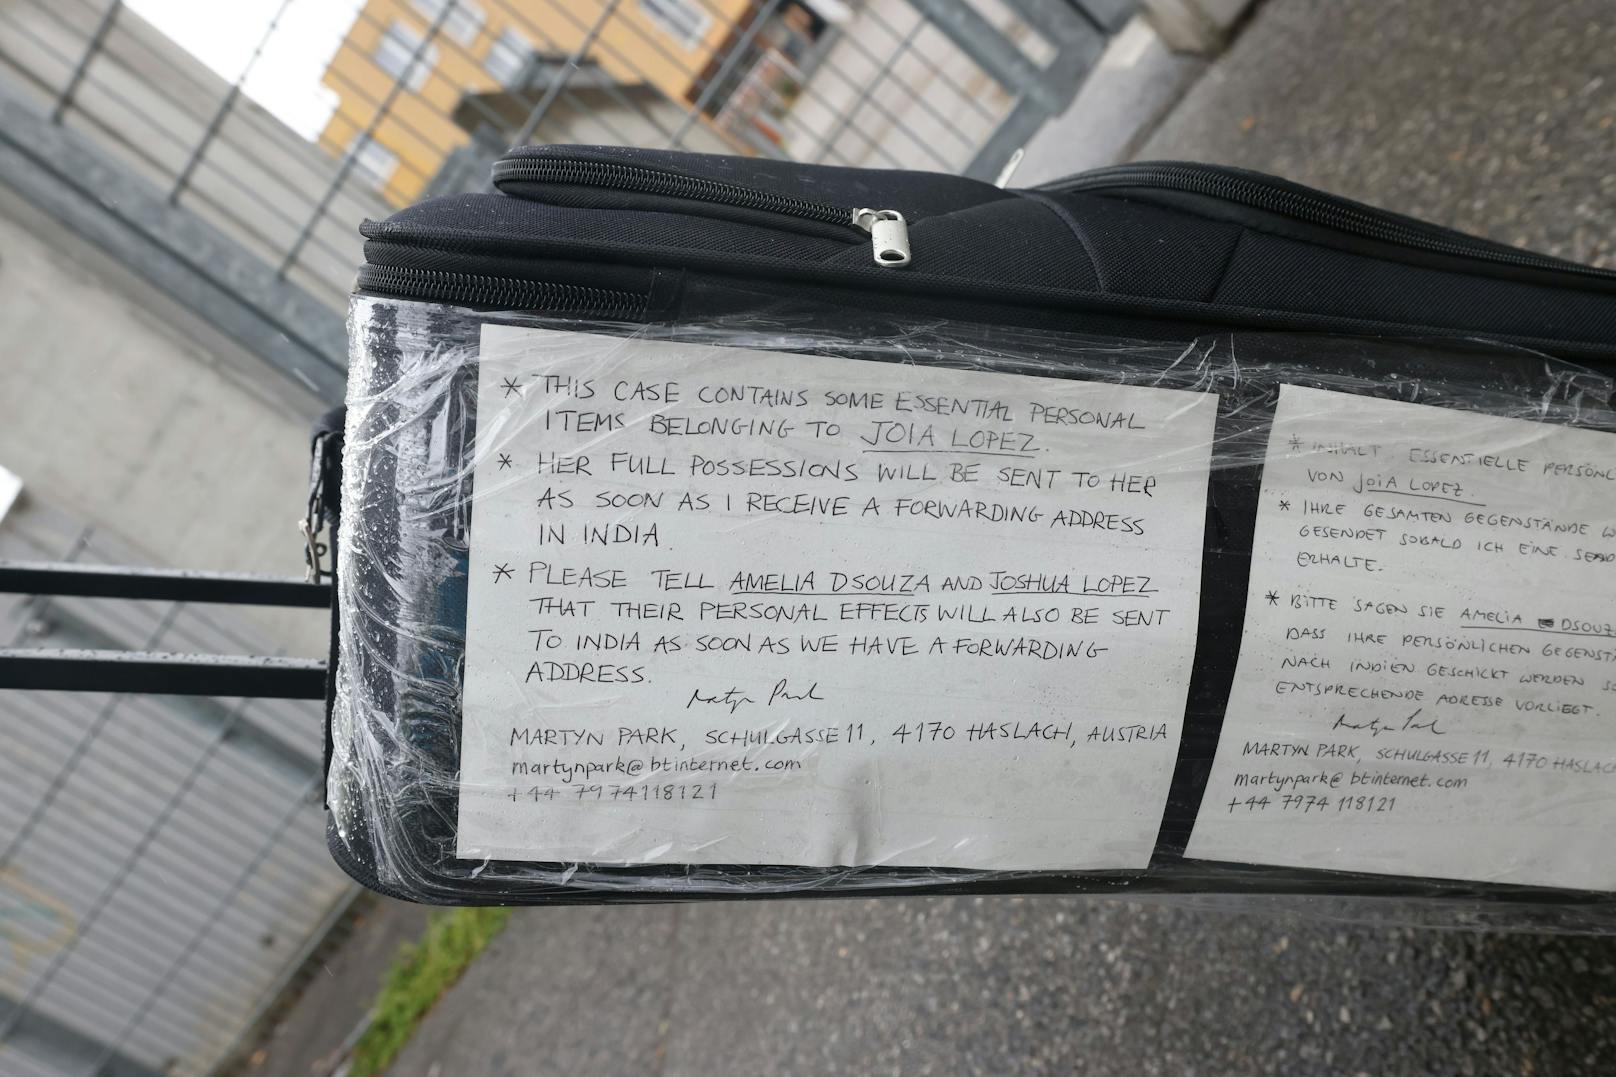 "This case contains some essential personal items belonging to Joia Lopez" steht auf dem Koffer zu lesen.